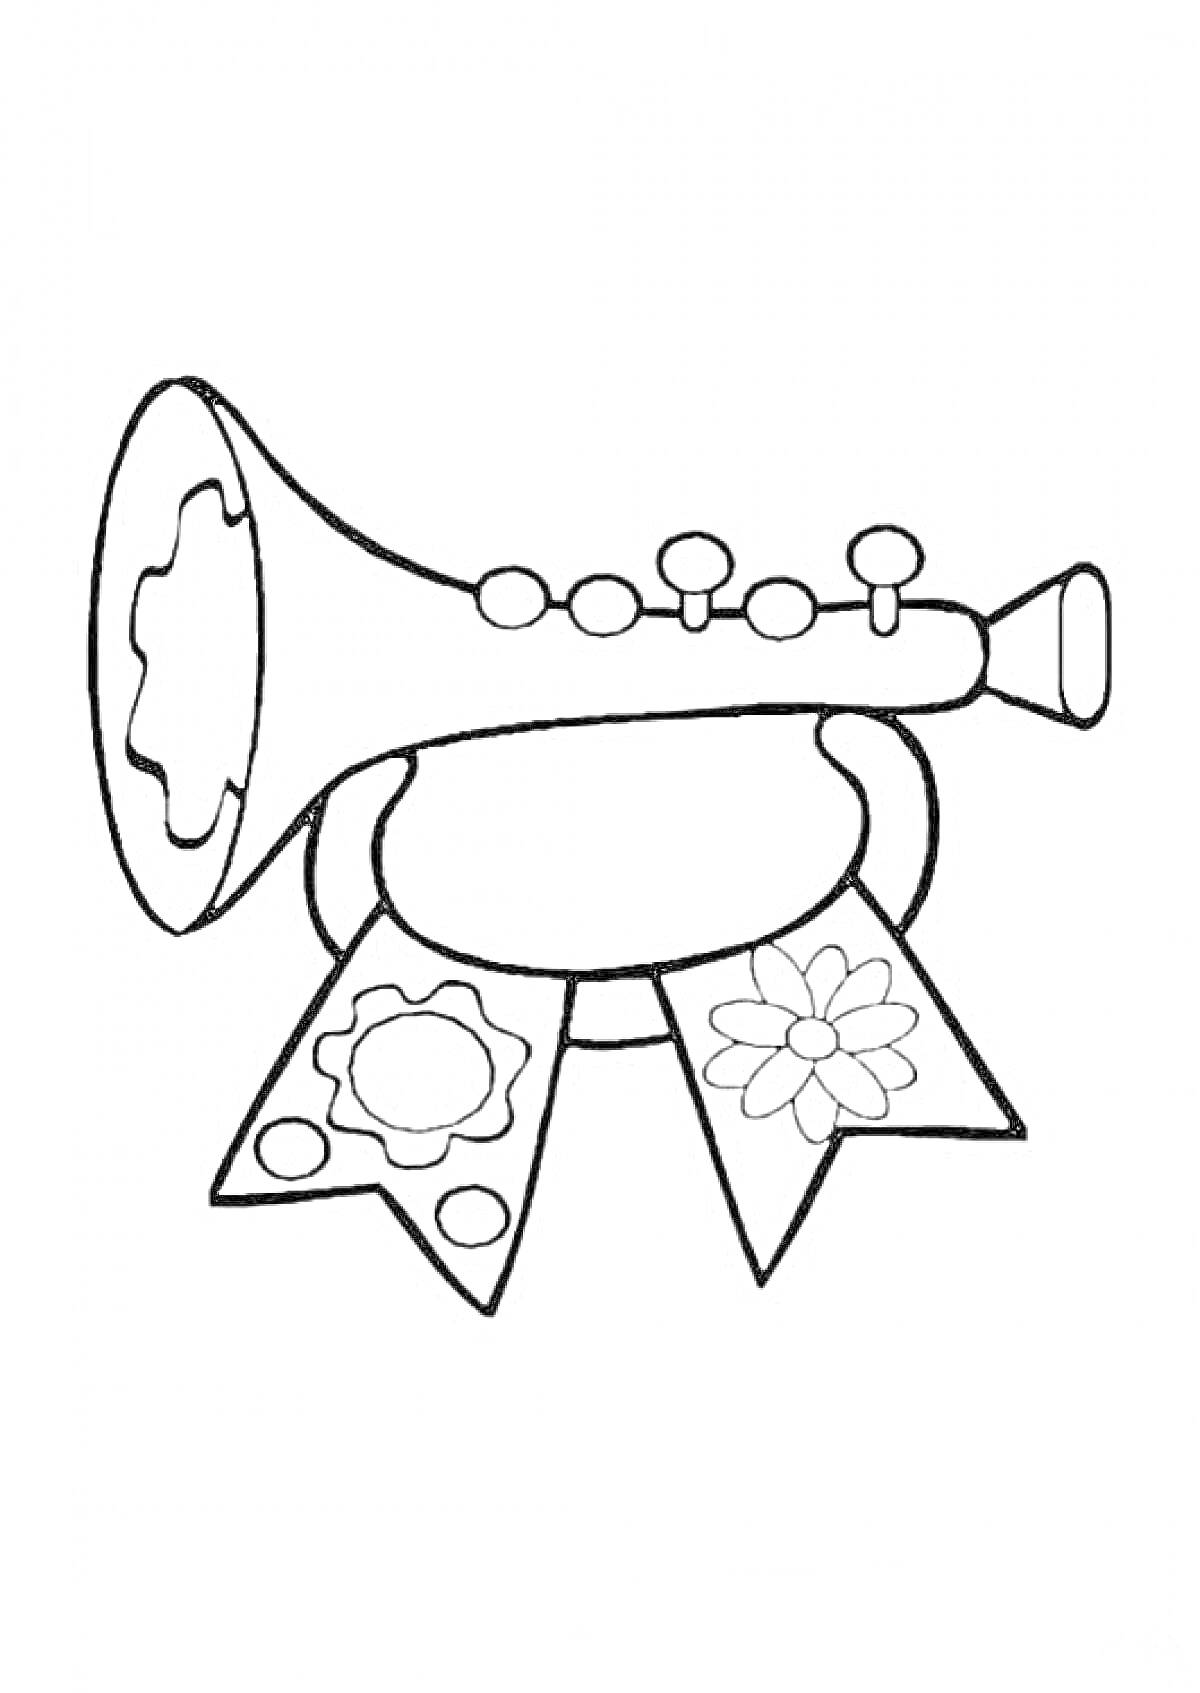 Раскраска Труба с узорами цветов и декоративными лентами